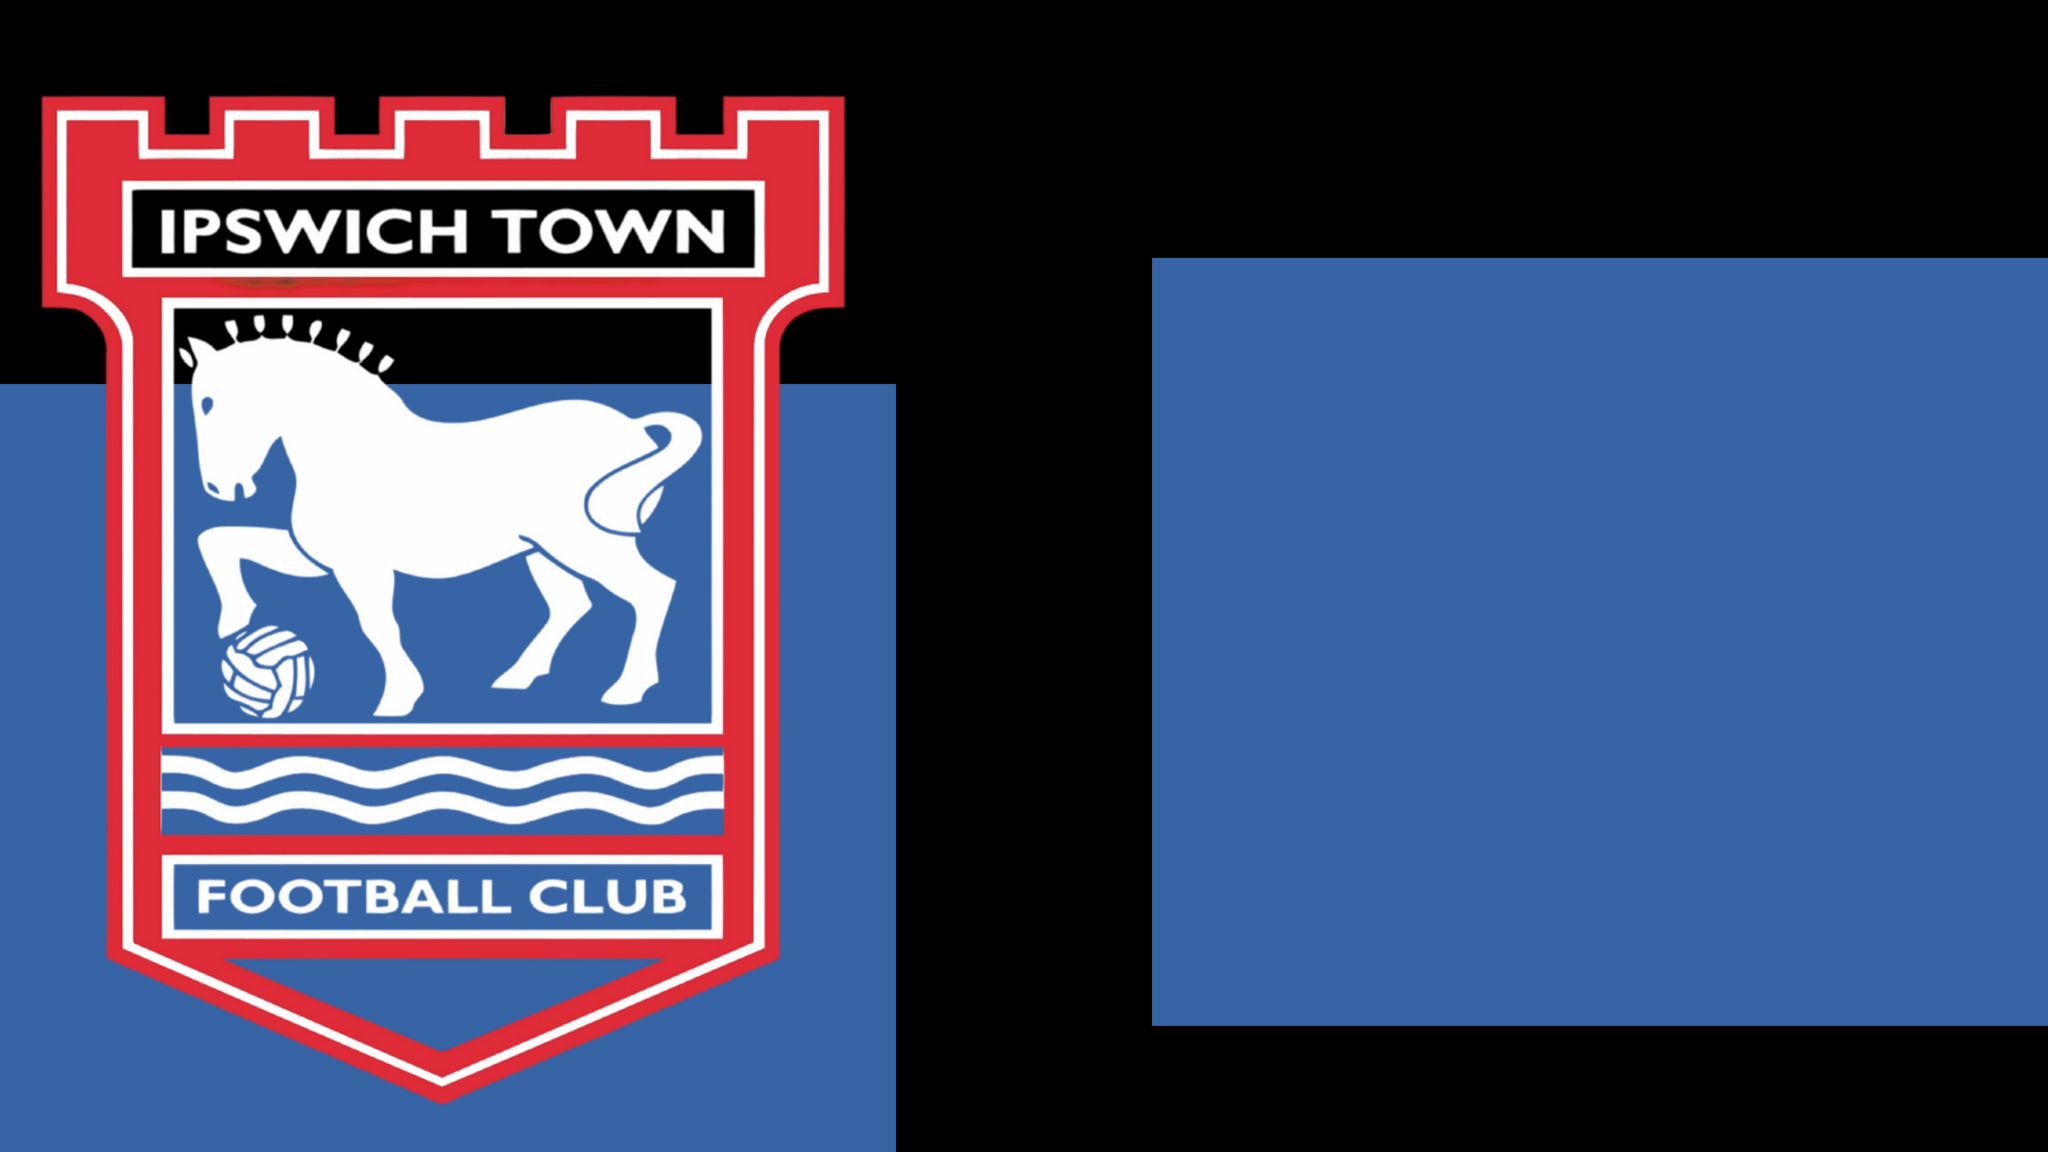 Ipswich Town club badge